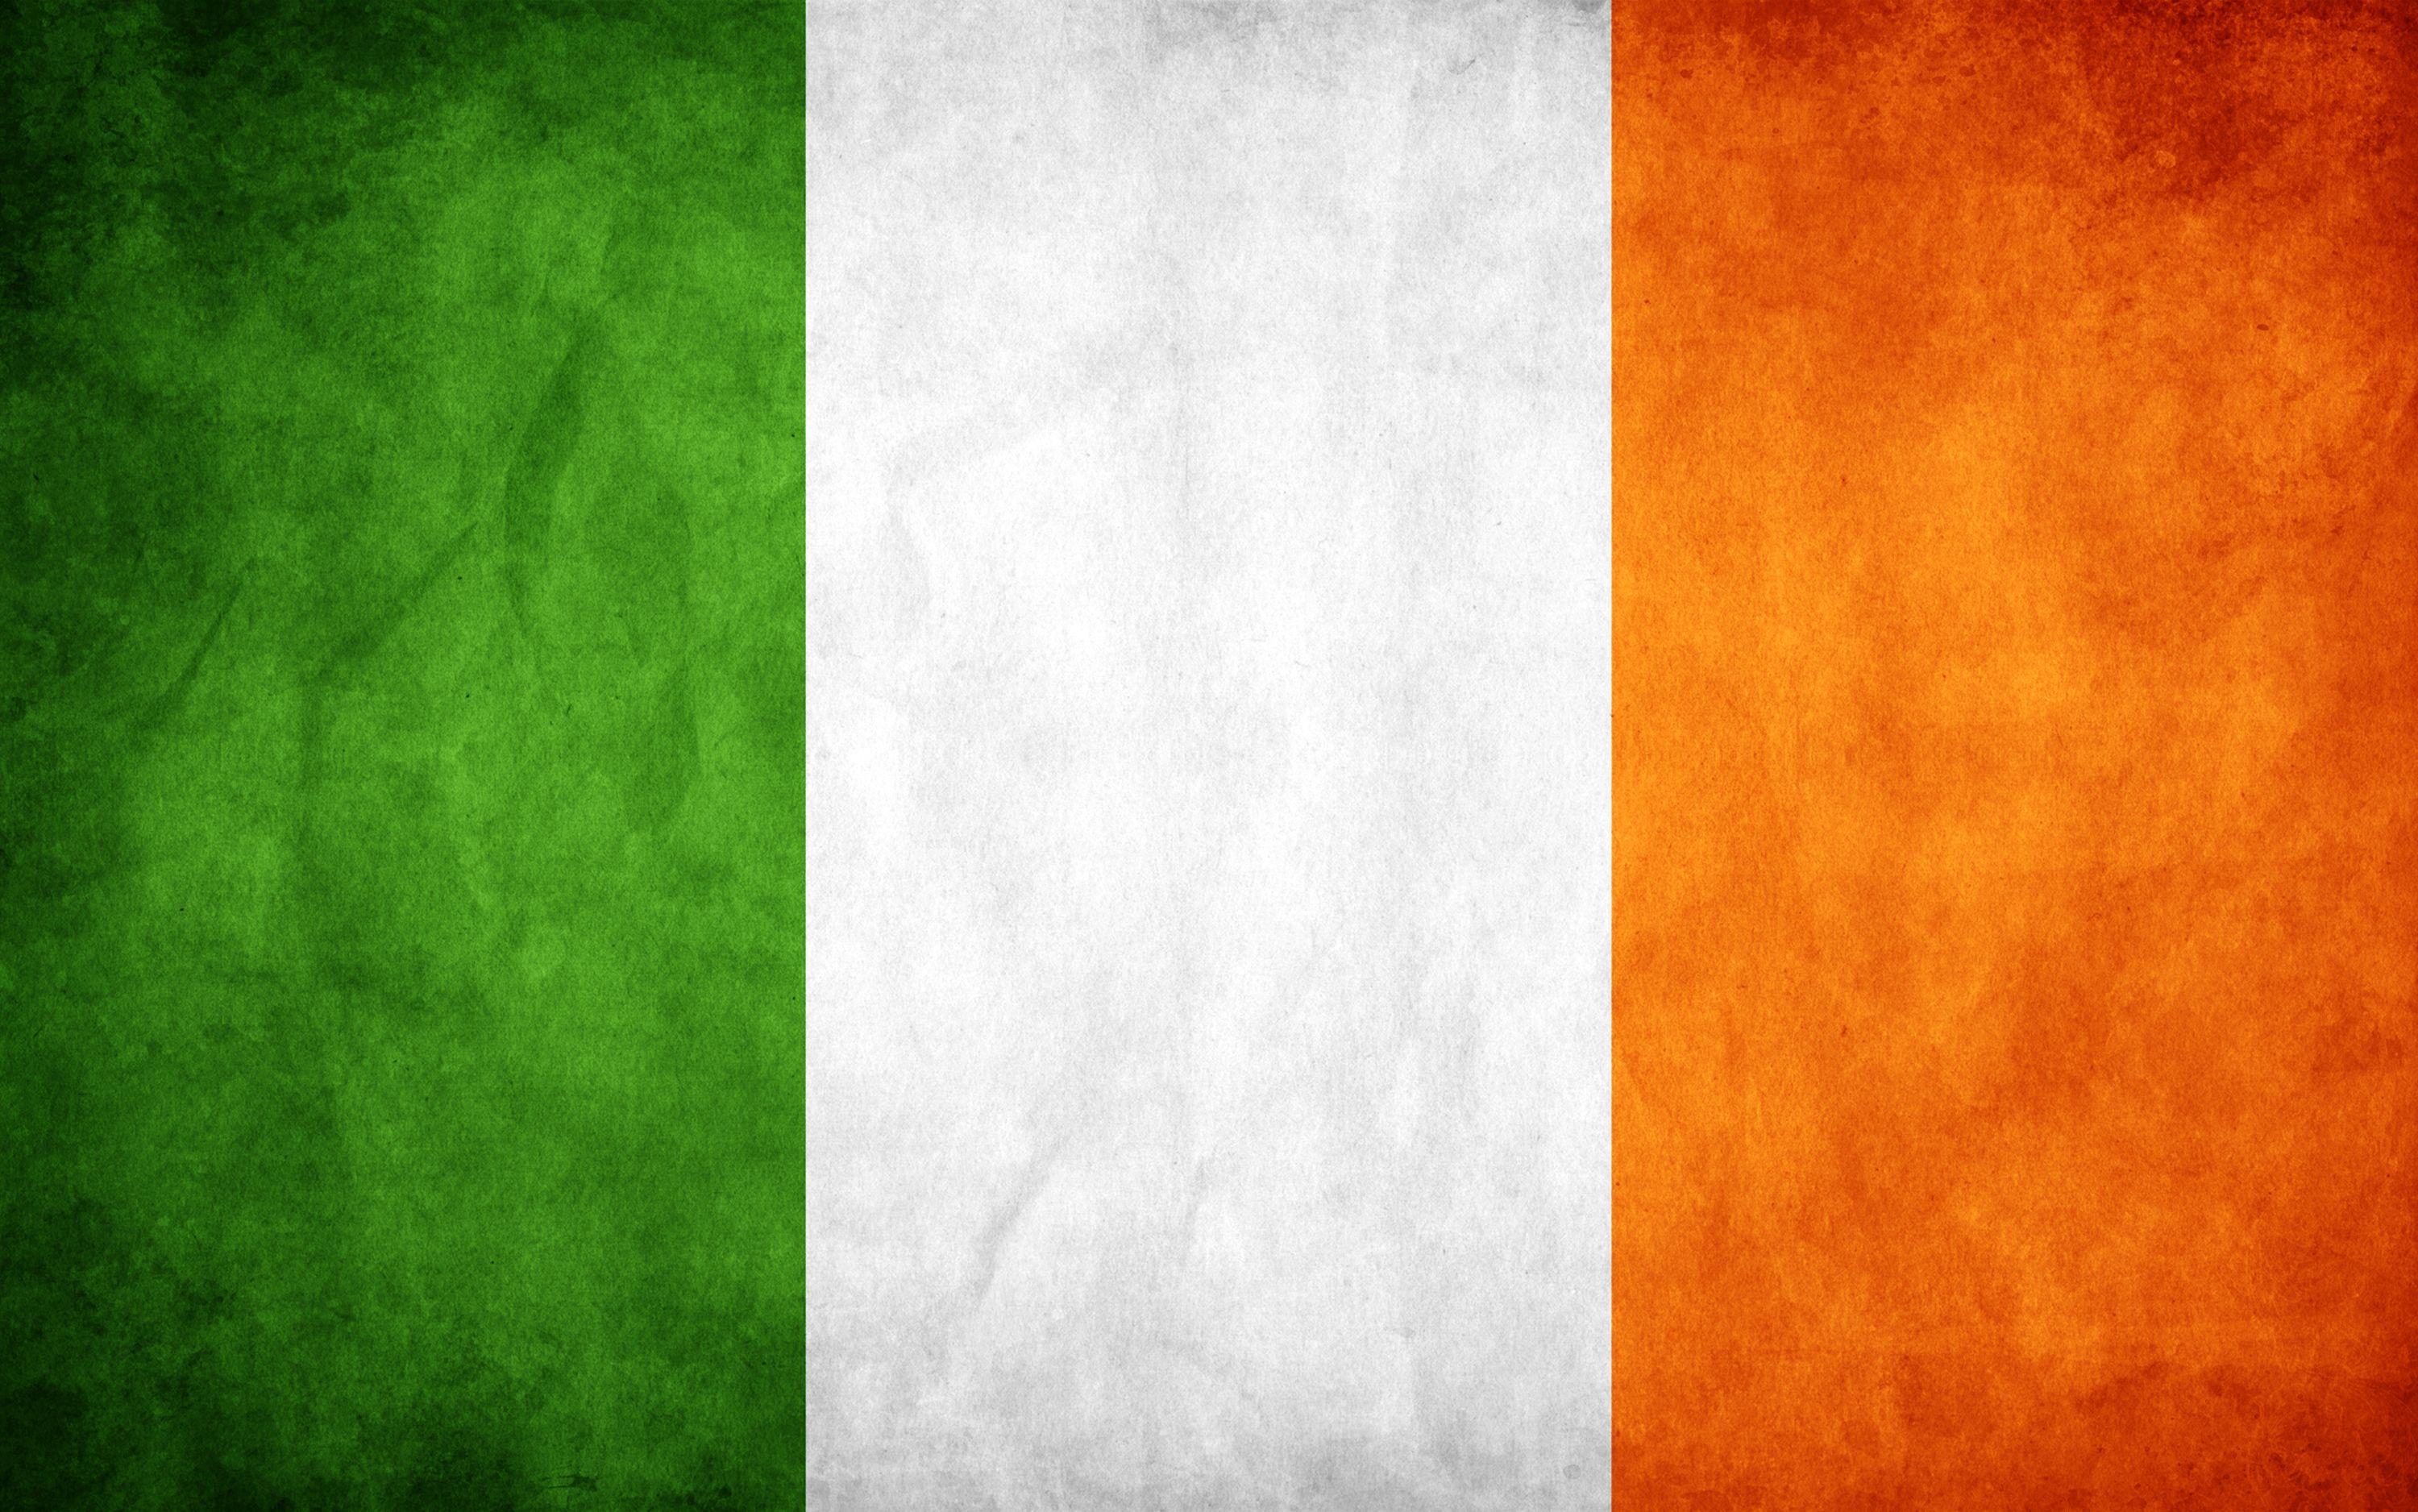 Irish Flag Logo - Ireland's Tricolour Flag